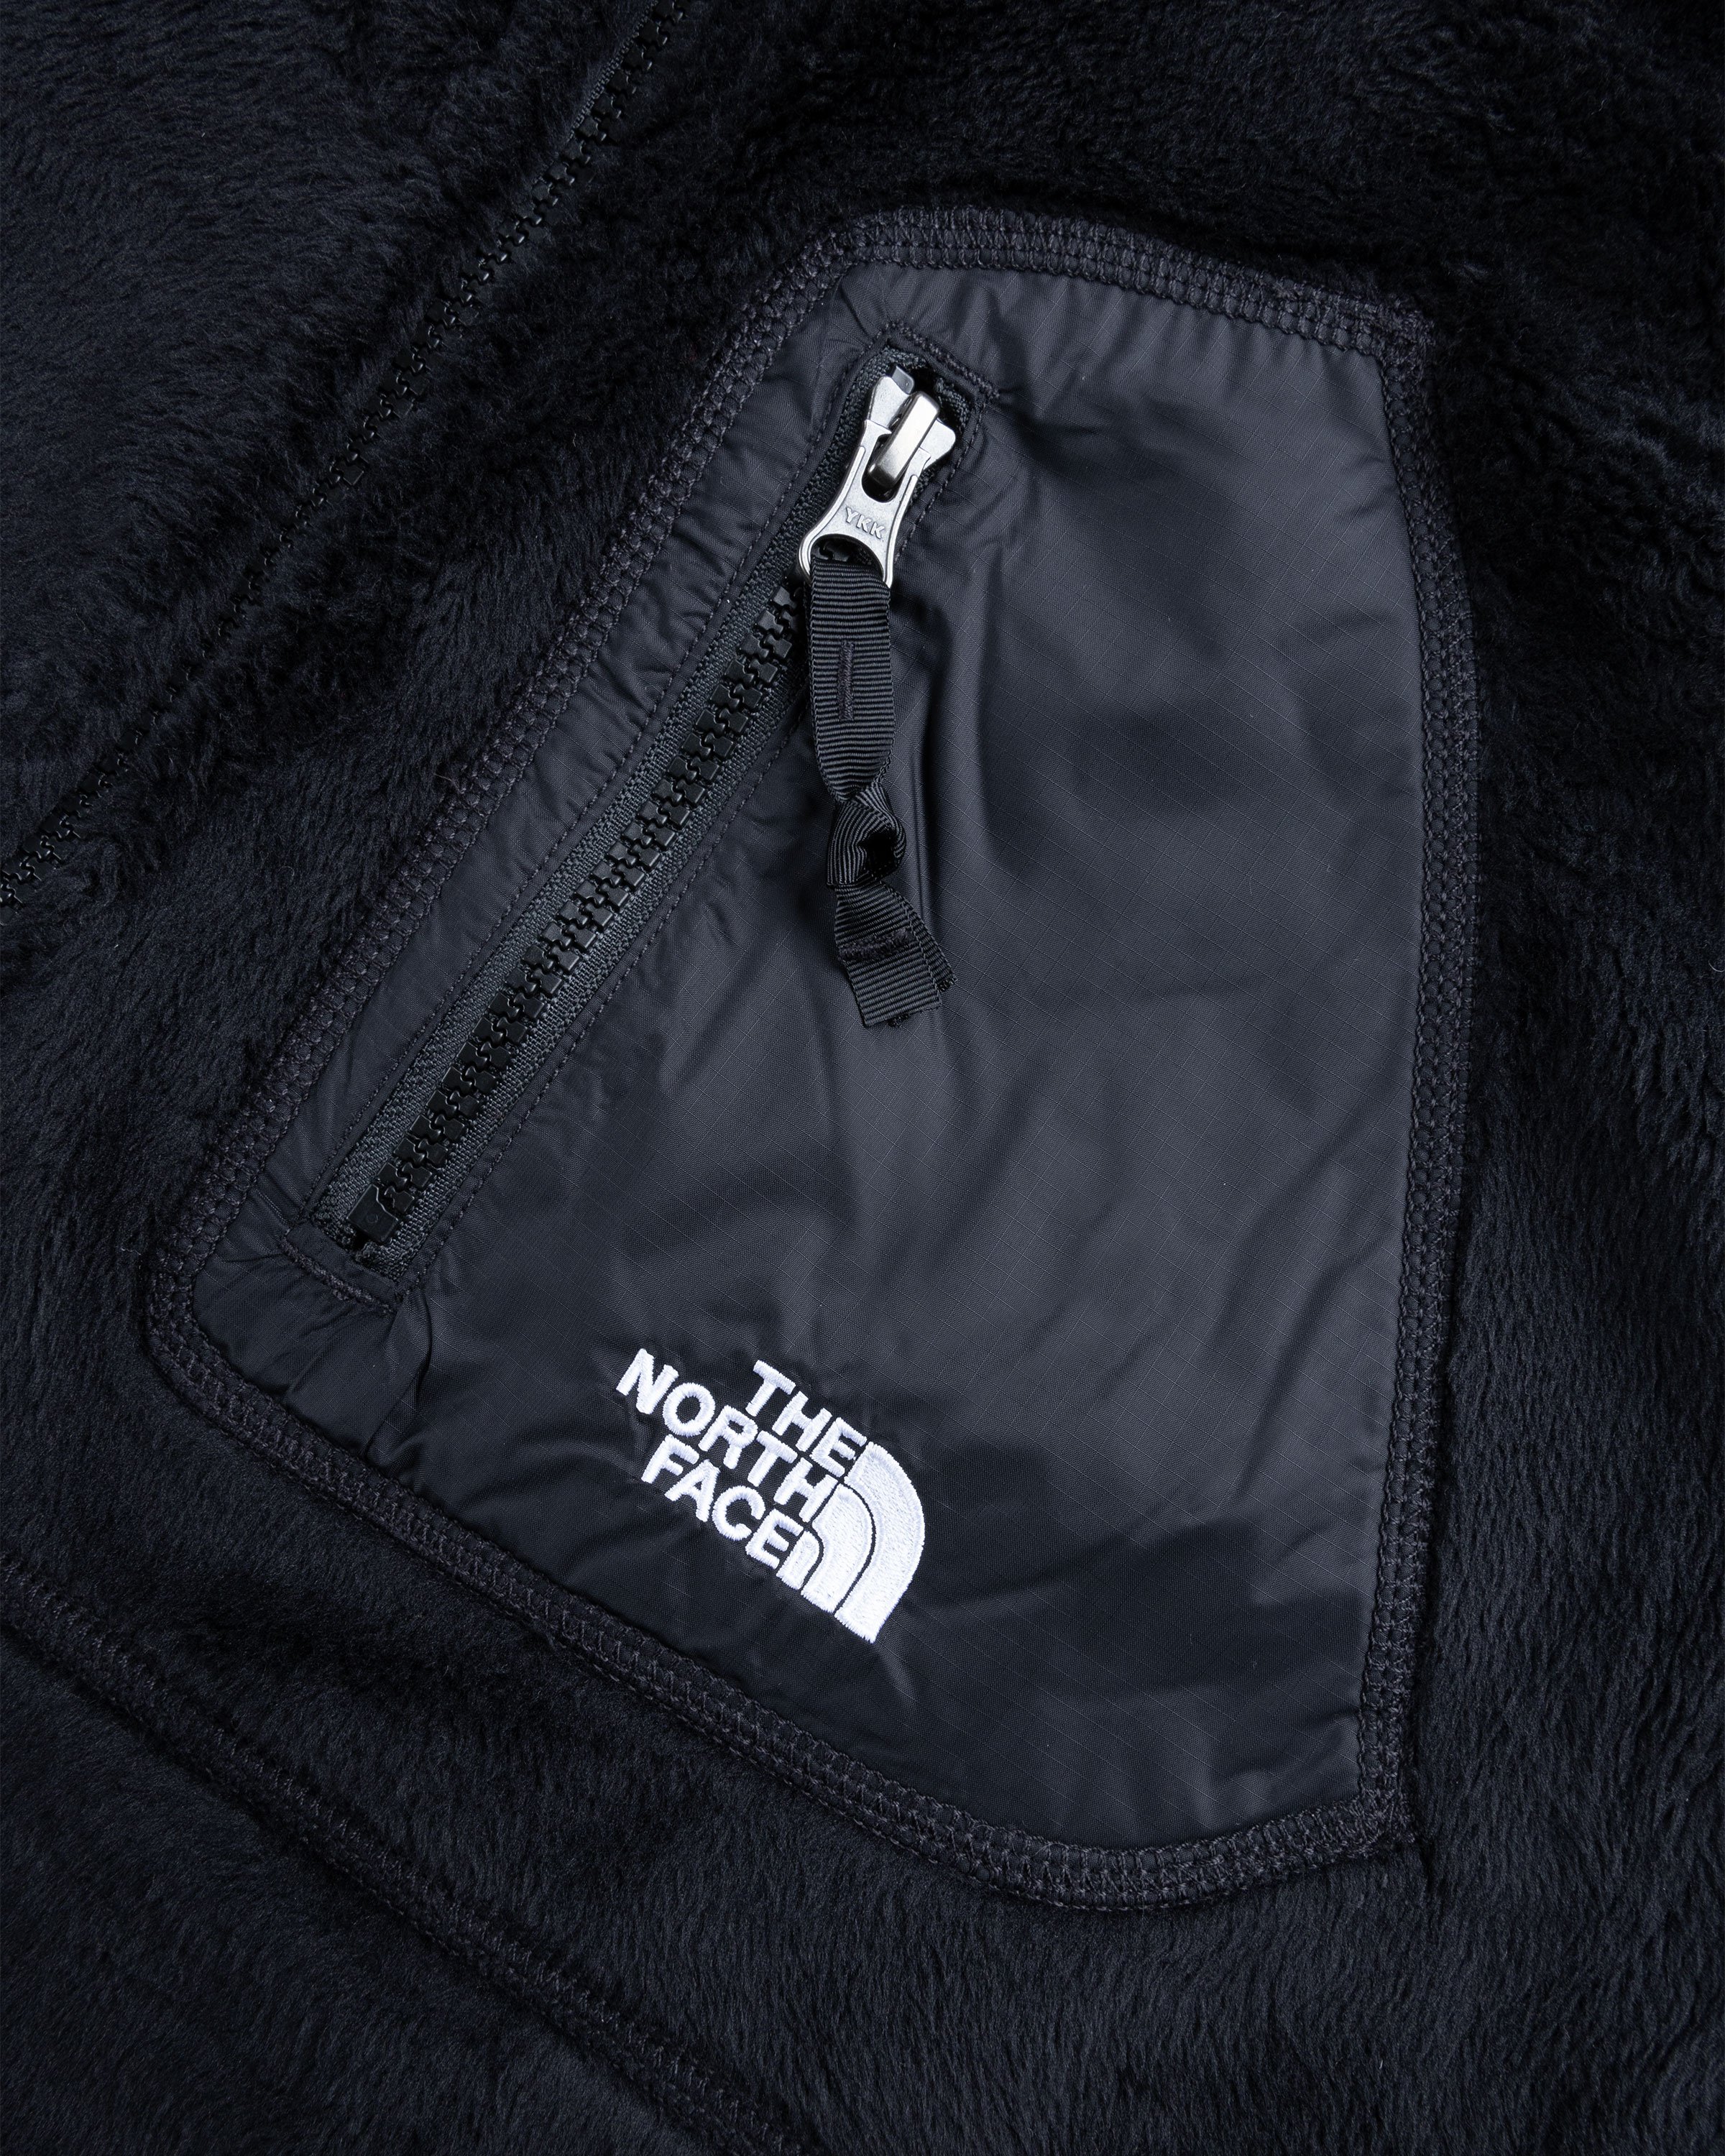 The North Face - Versa Velour Jacket Black - Clothing - Black - Image 6